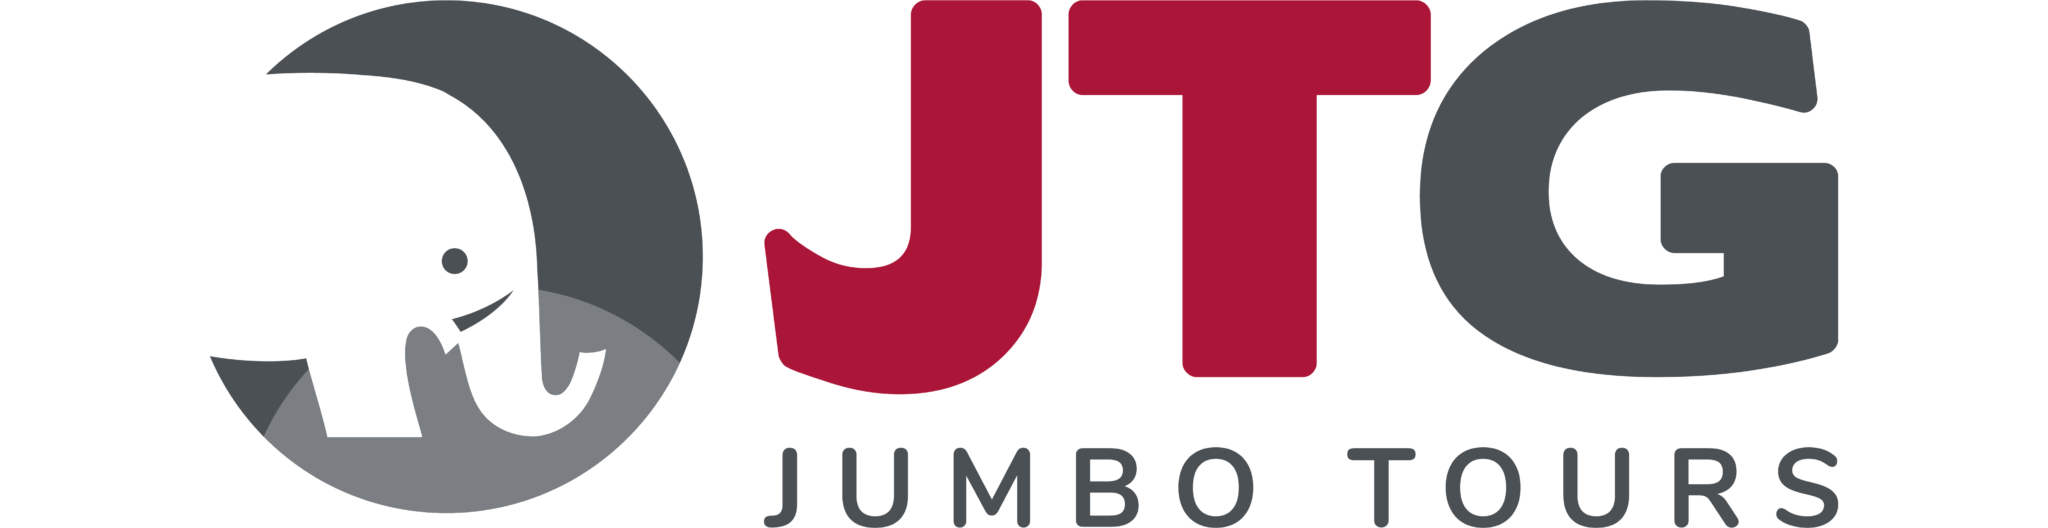 jumbo tours contact